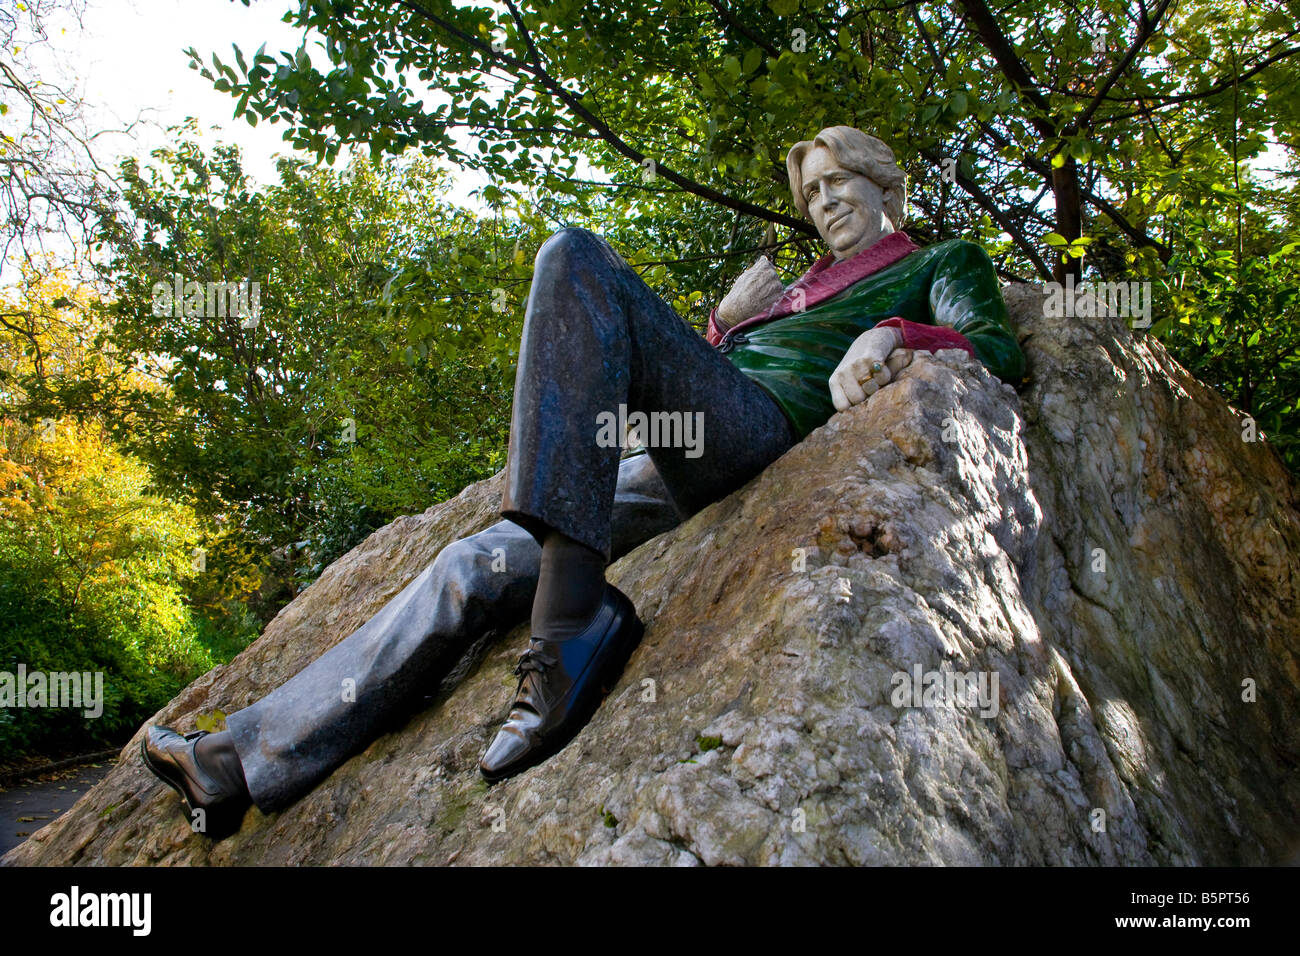 Staue de Oscar Wilde, Merrion Square, Dublin, Irlanda Foto de stock